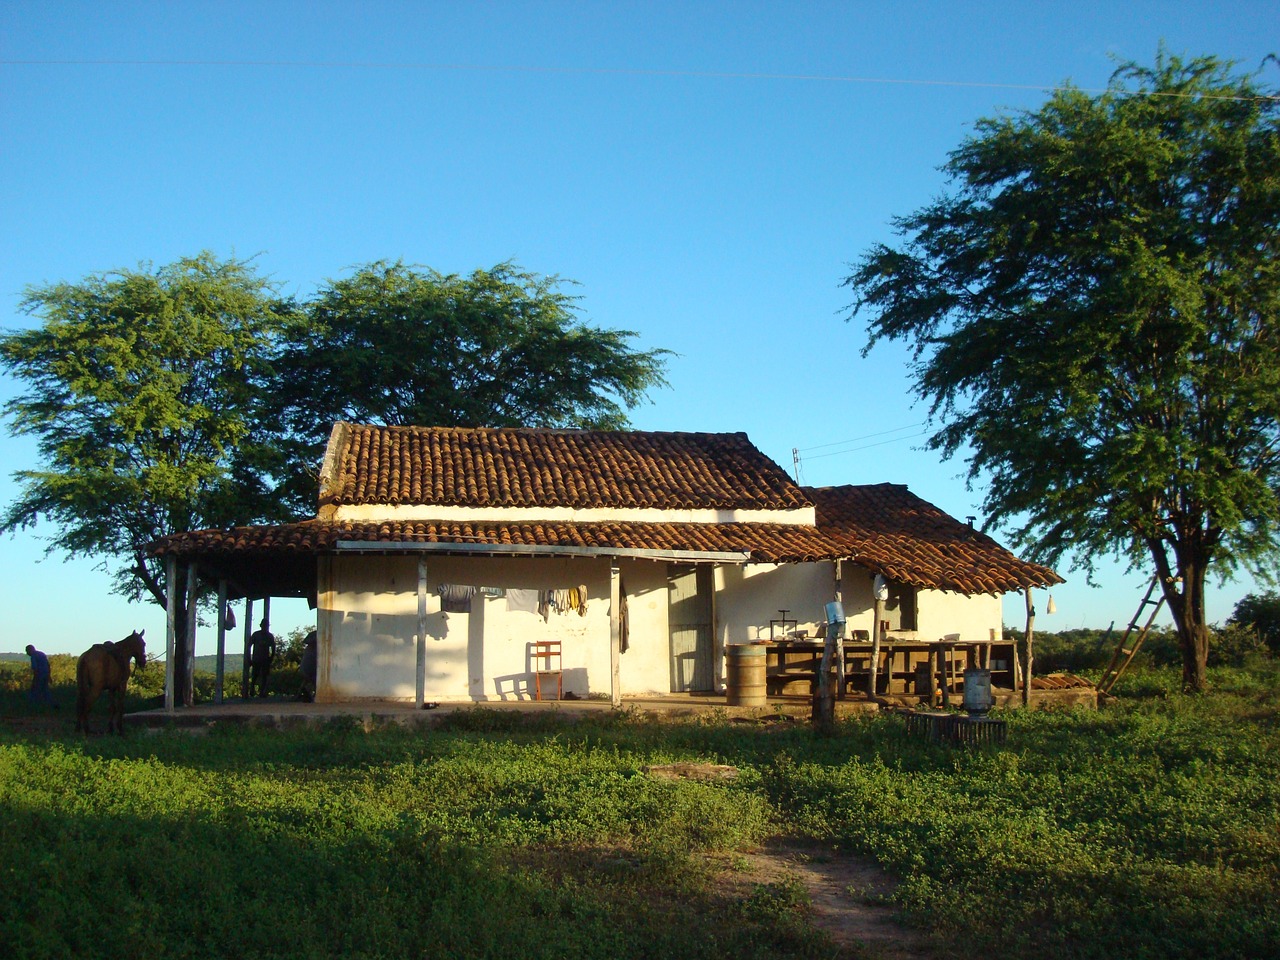 farm rural uiraúna-pb free photo